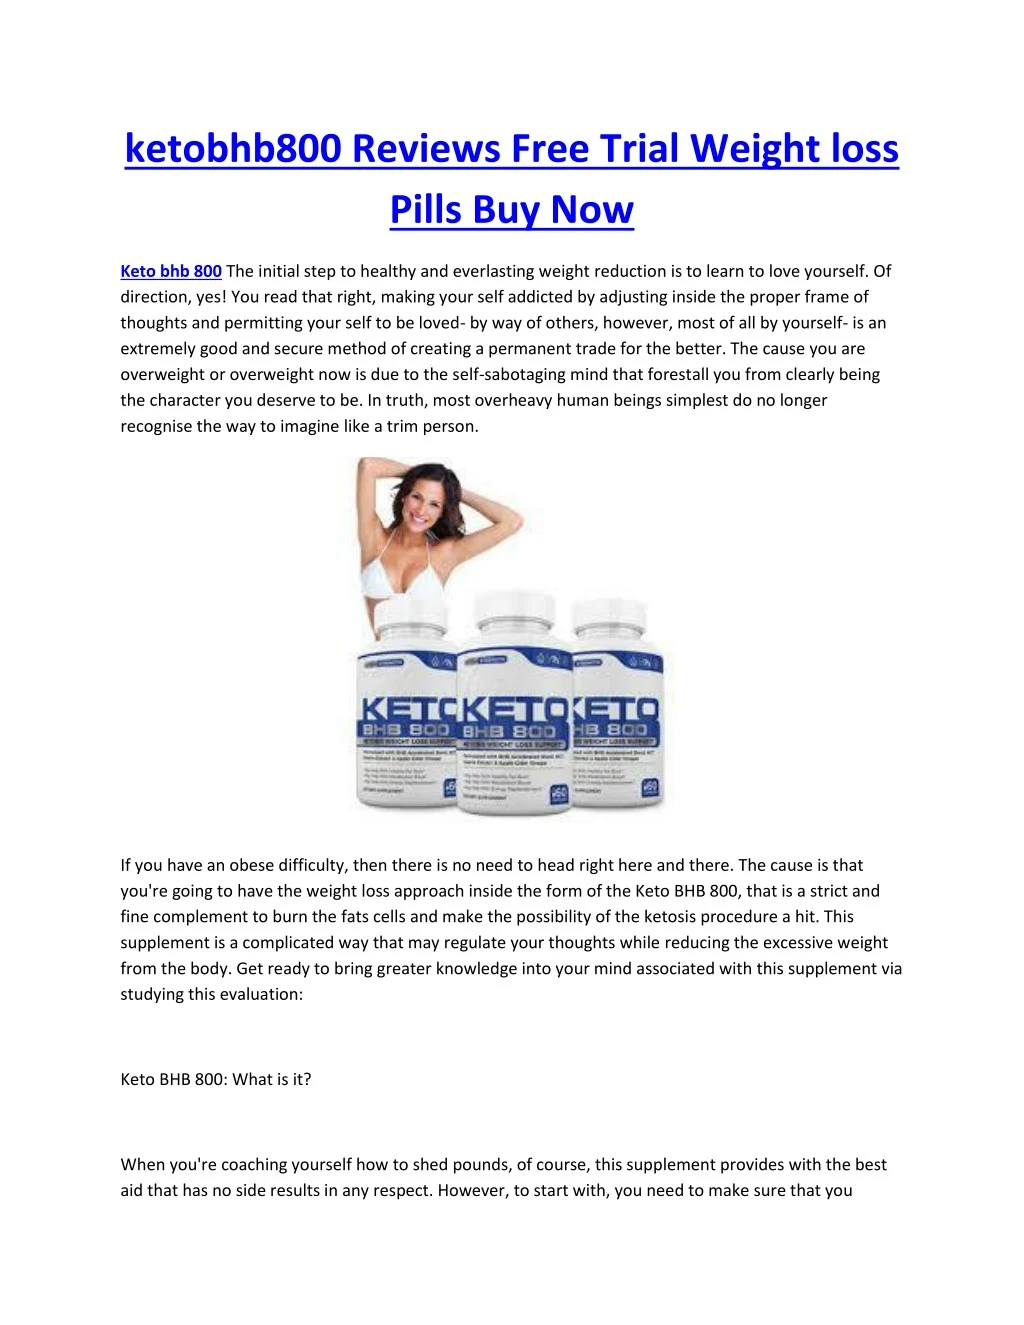 ketobhb800 reviews free trial weight loss pills